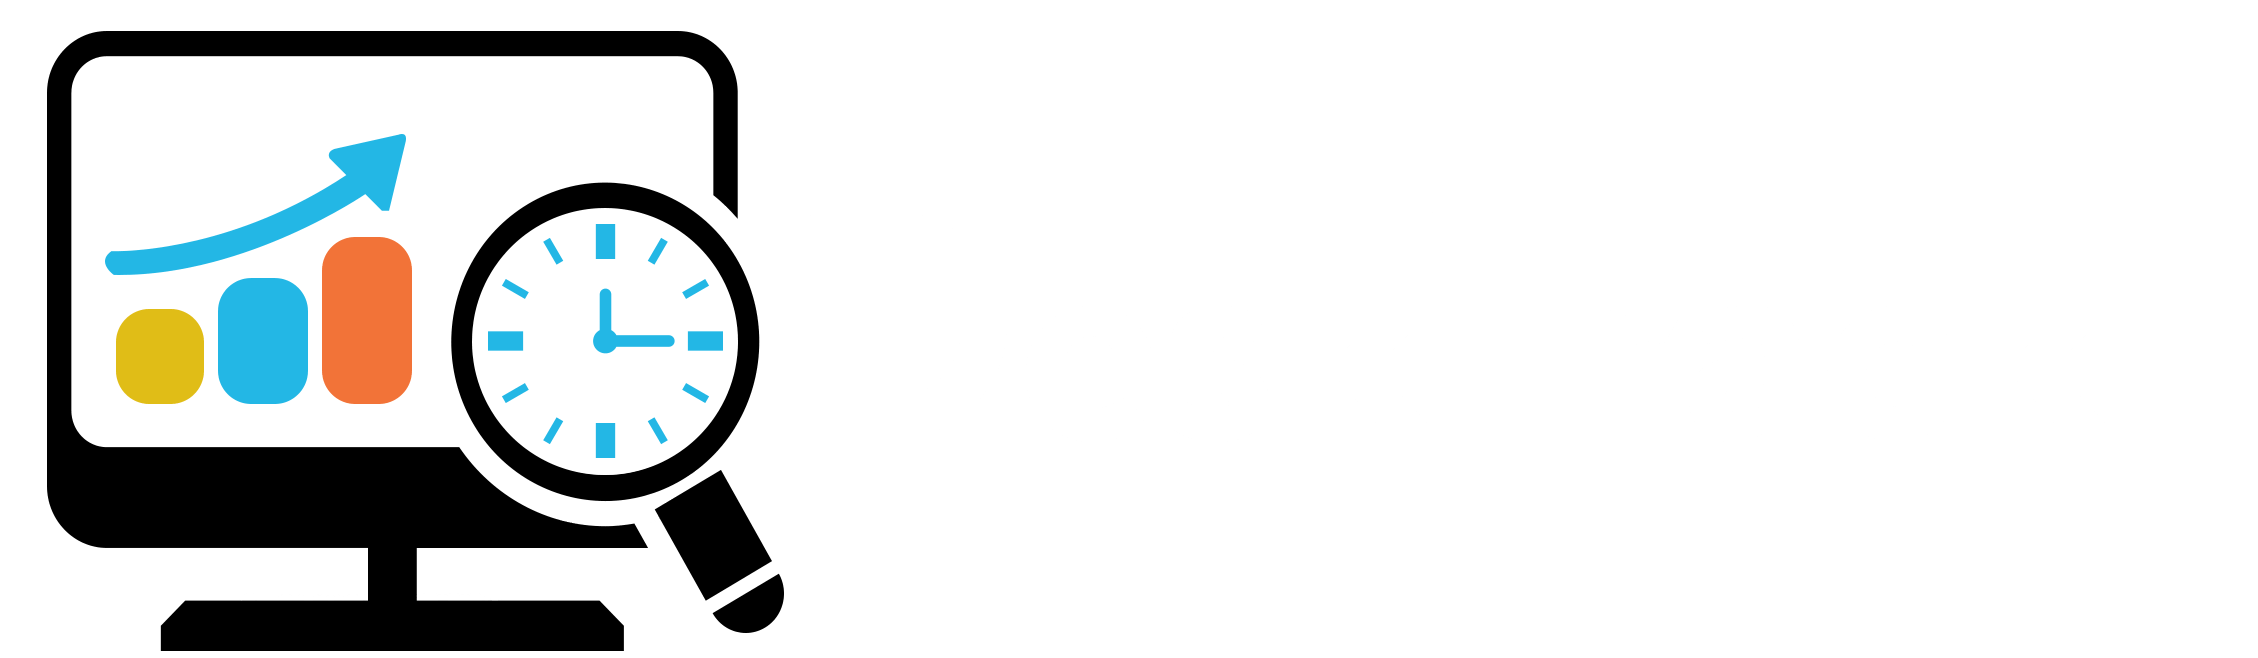 Desk-track